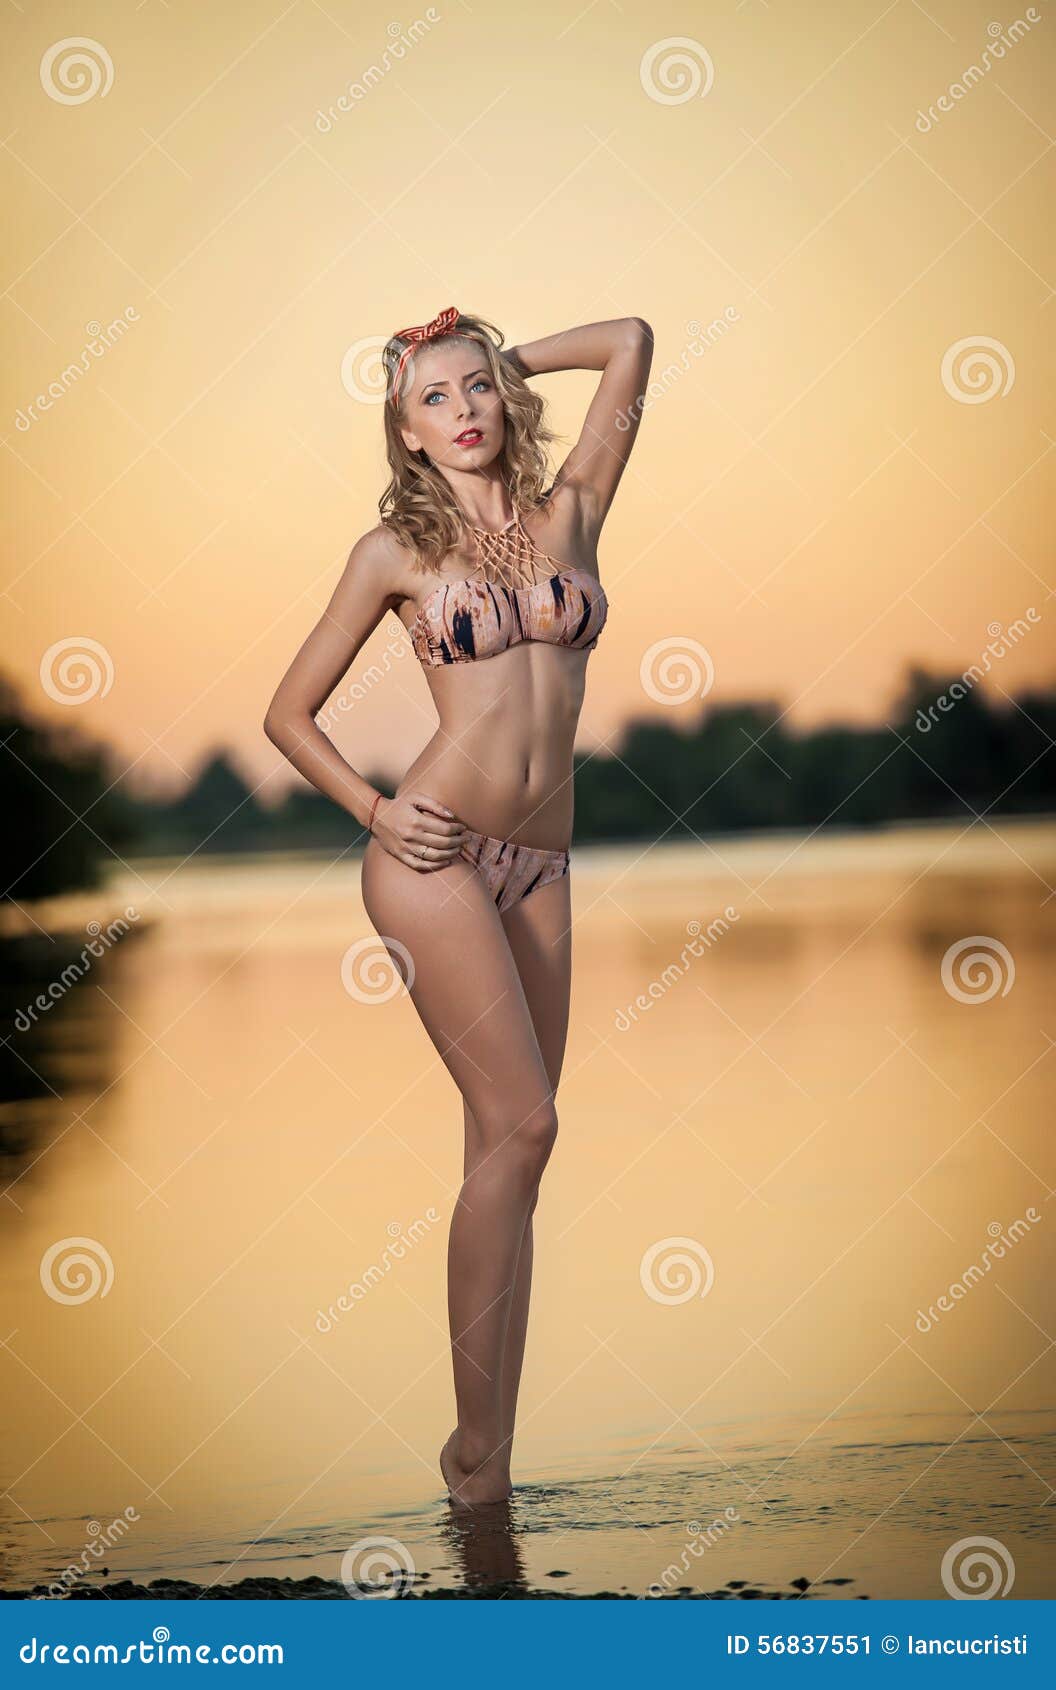 ammellia nyatop recommends nude girls beach photos pic